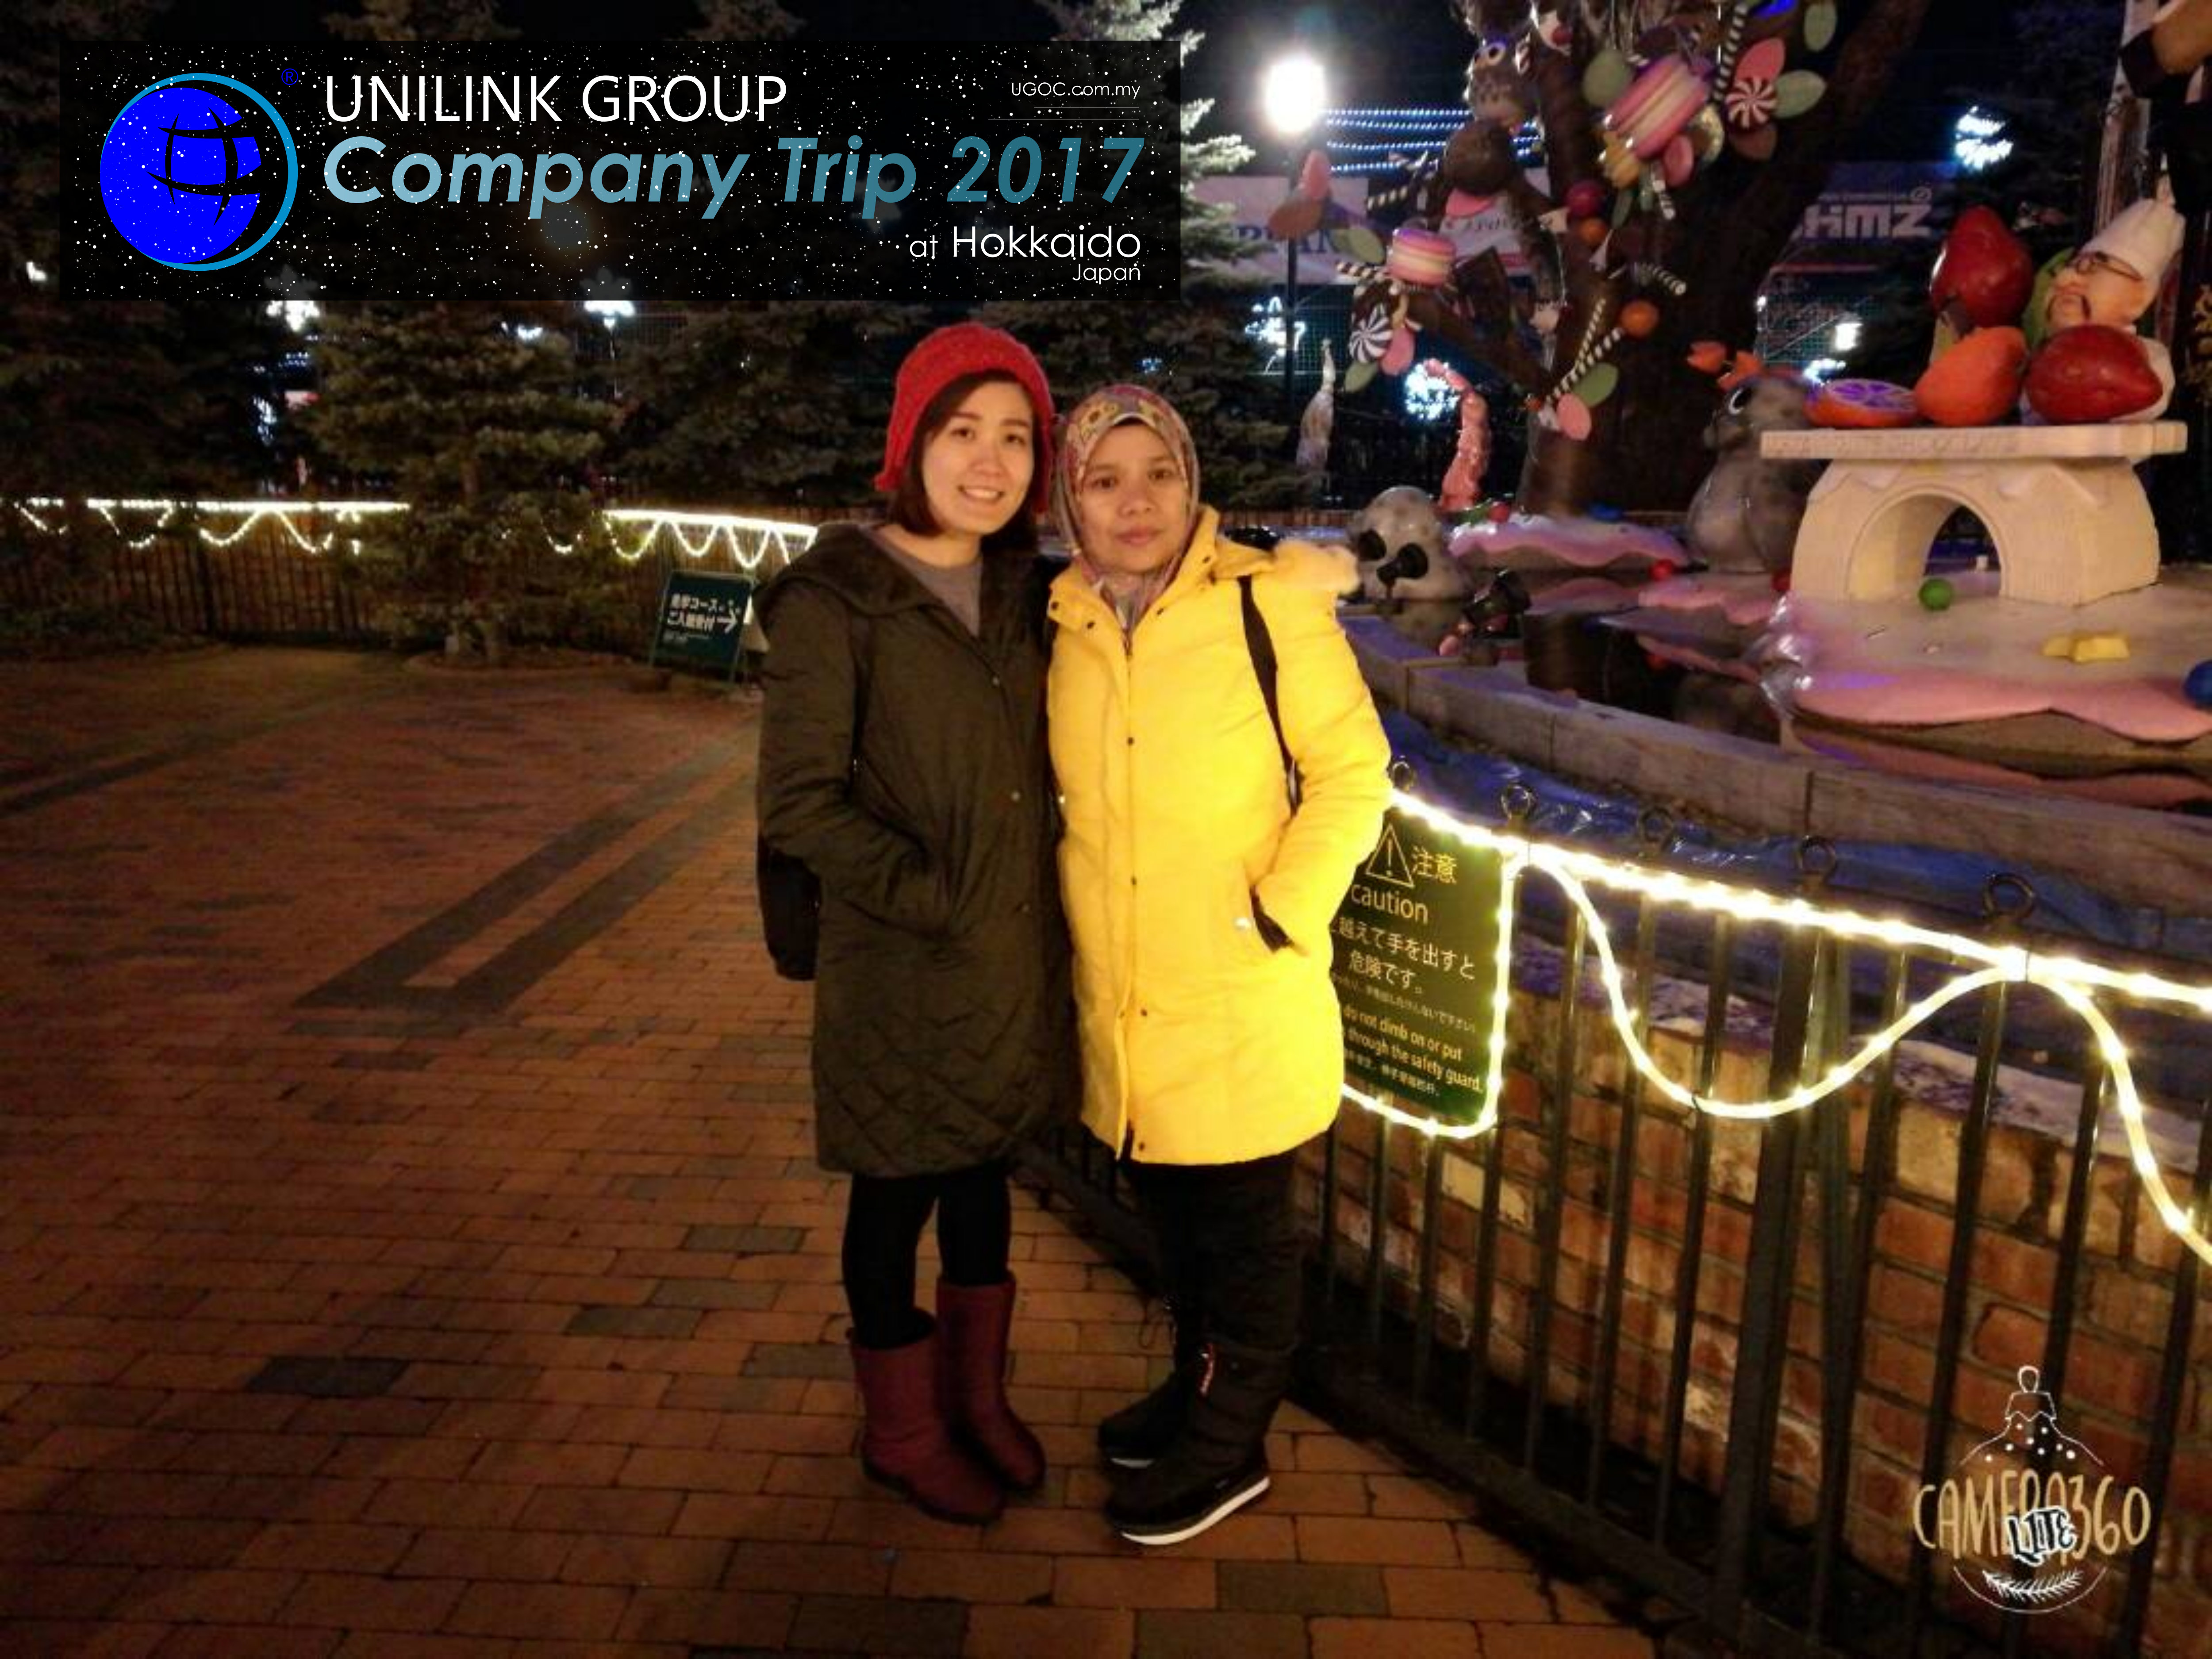 Unilink Group Company Trip 2017 from Agensi Pekerjaan Unilink Prospects Sdn Bhd at Hokkaido Japan 25